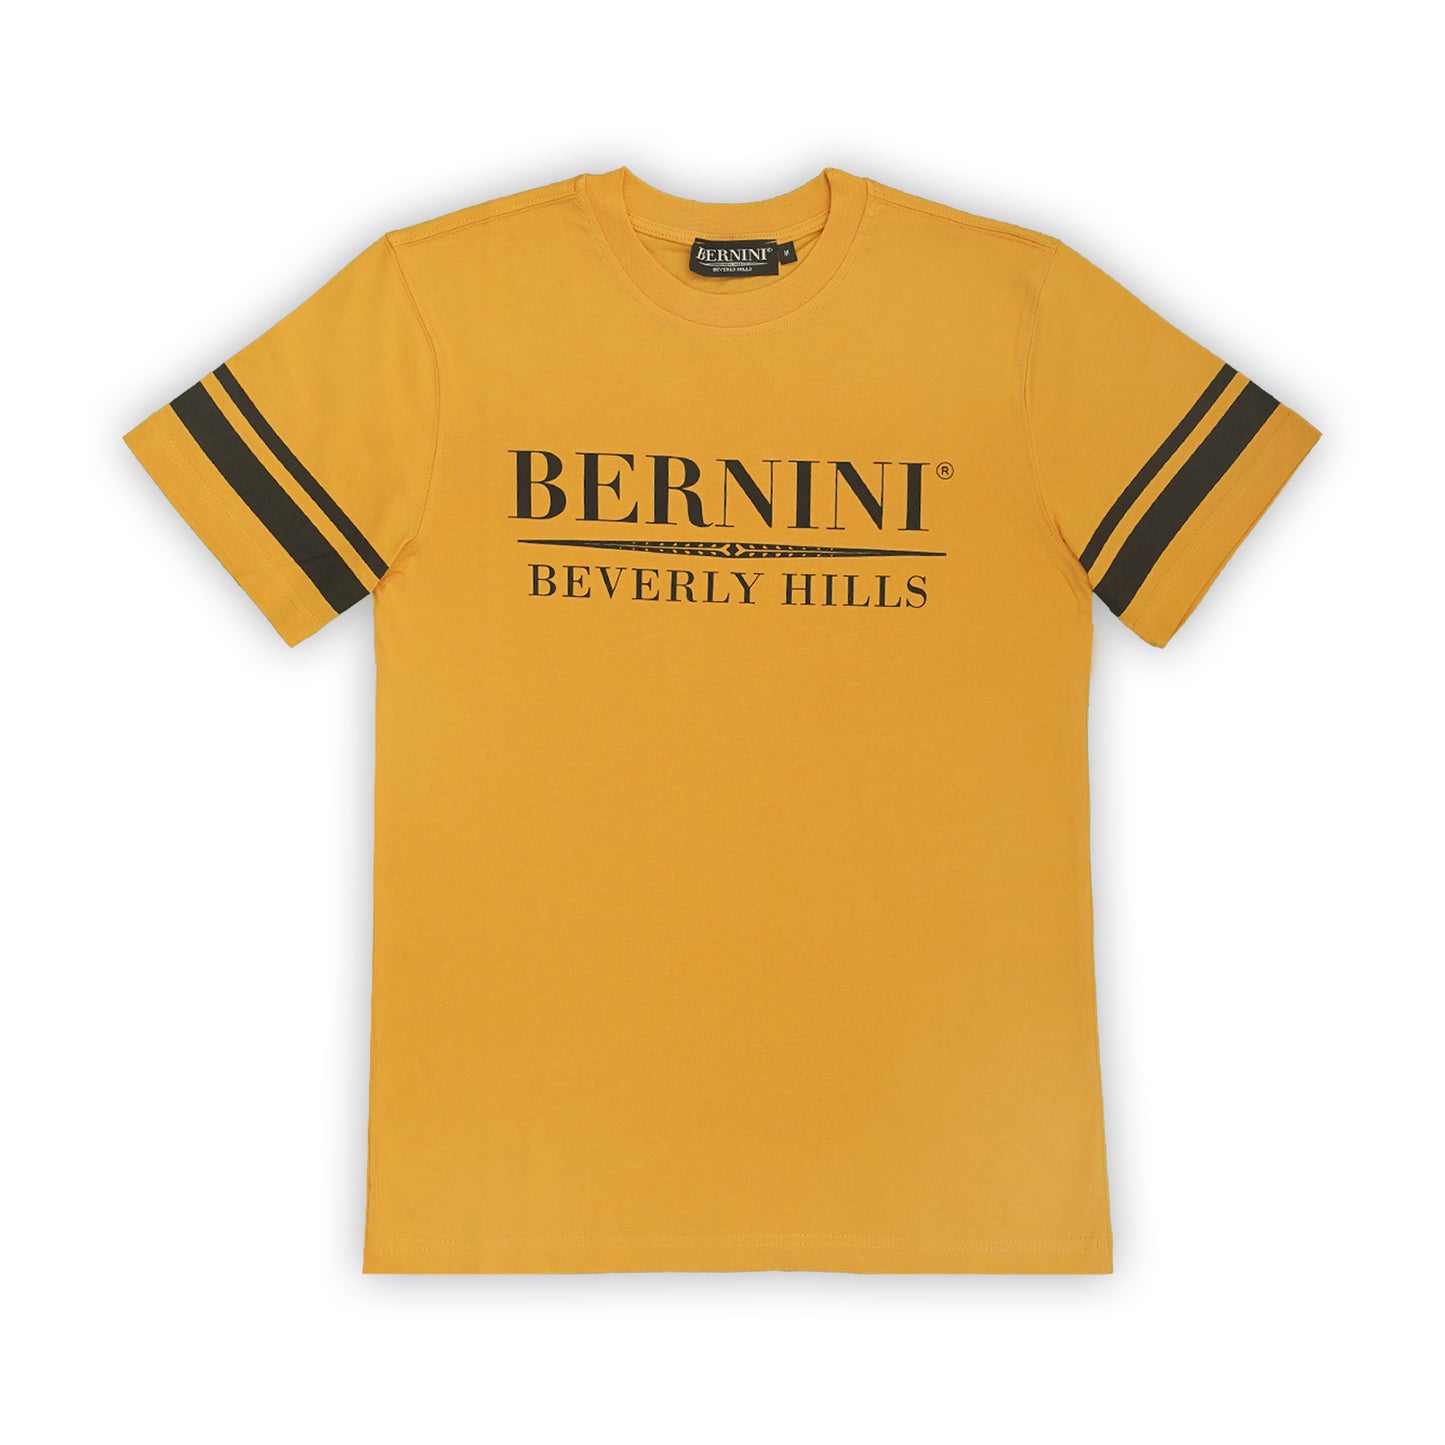 BERNINI BEVERLY HILLS T-SHIRTS